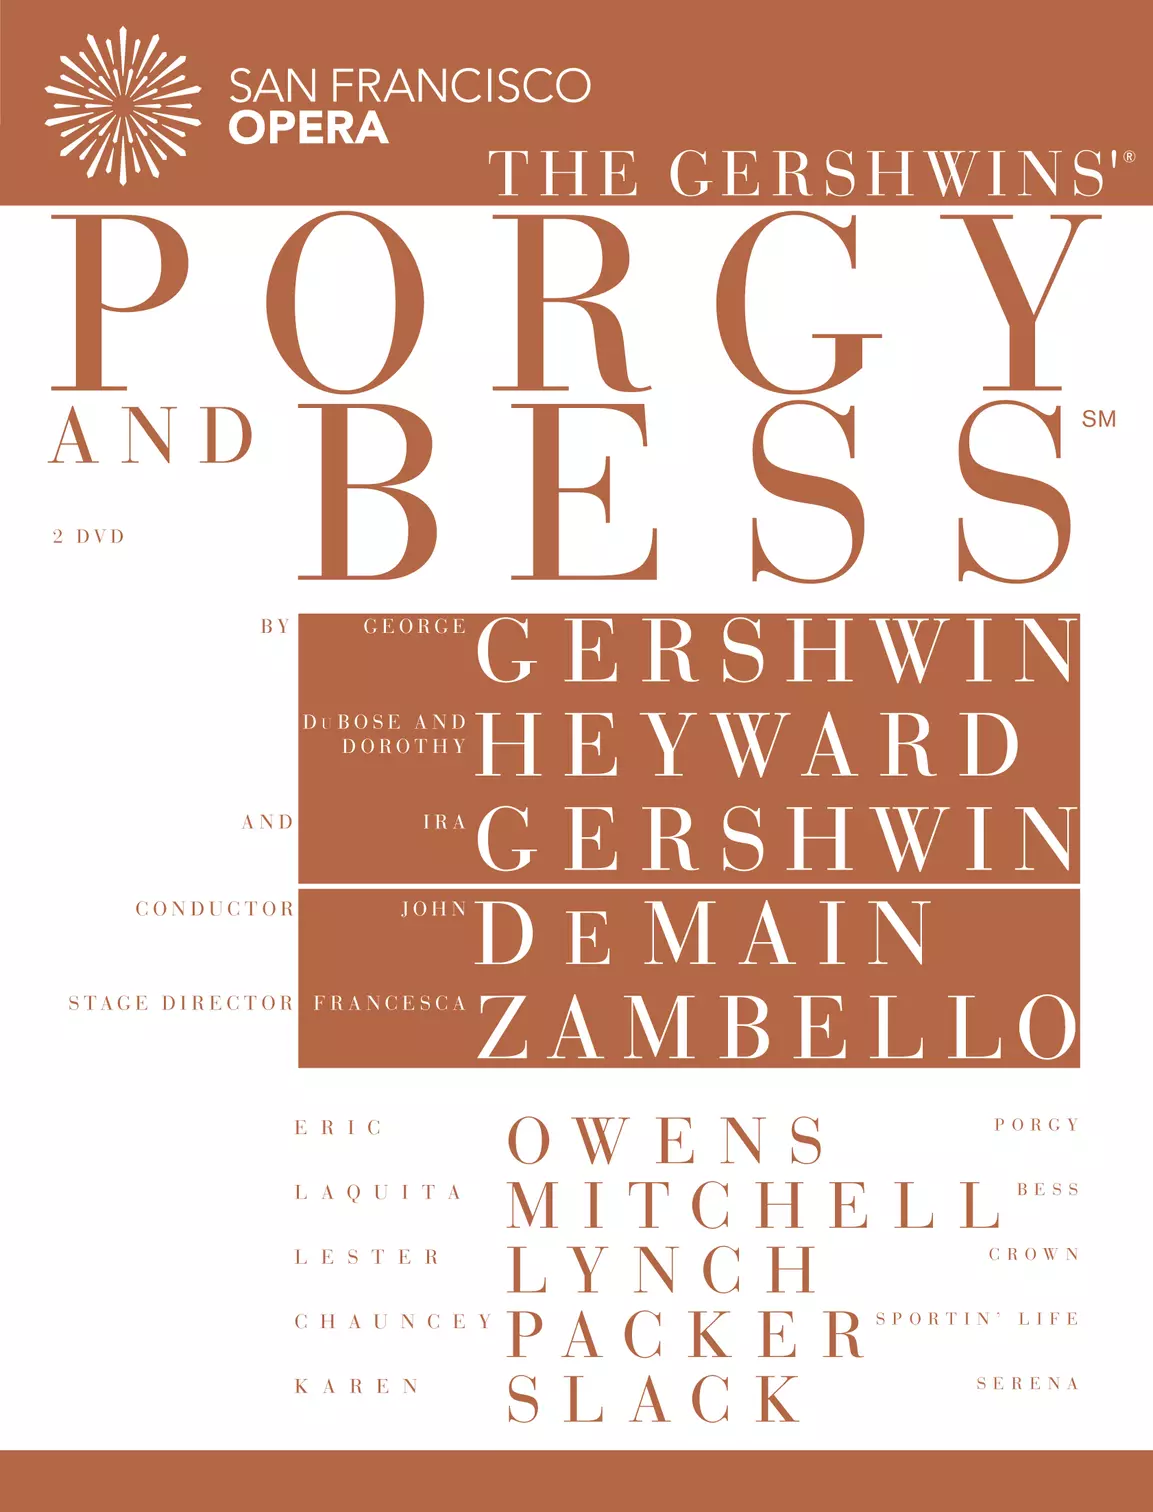 San Francisco Opera: The Gershwins' Porgy and Bess